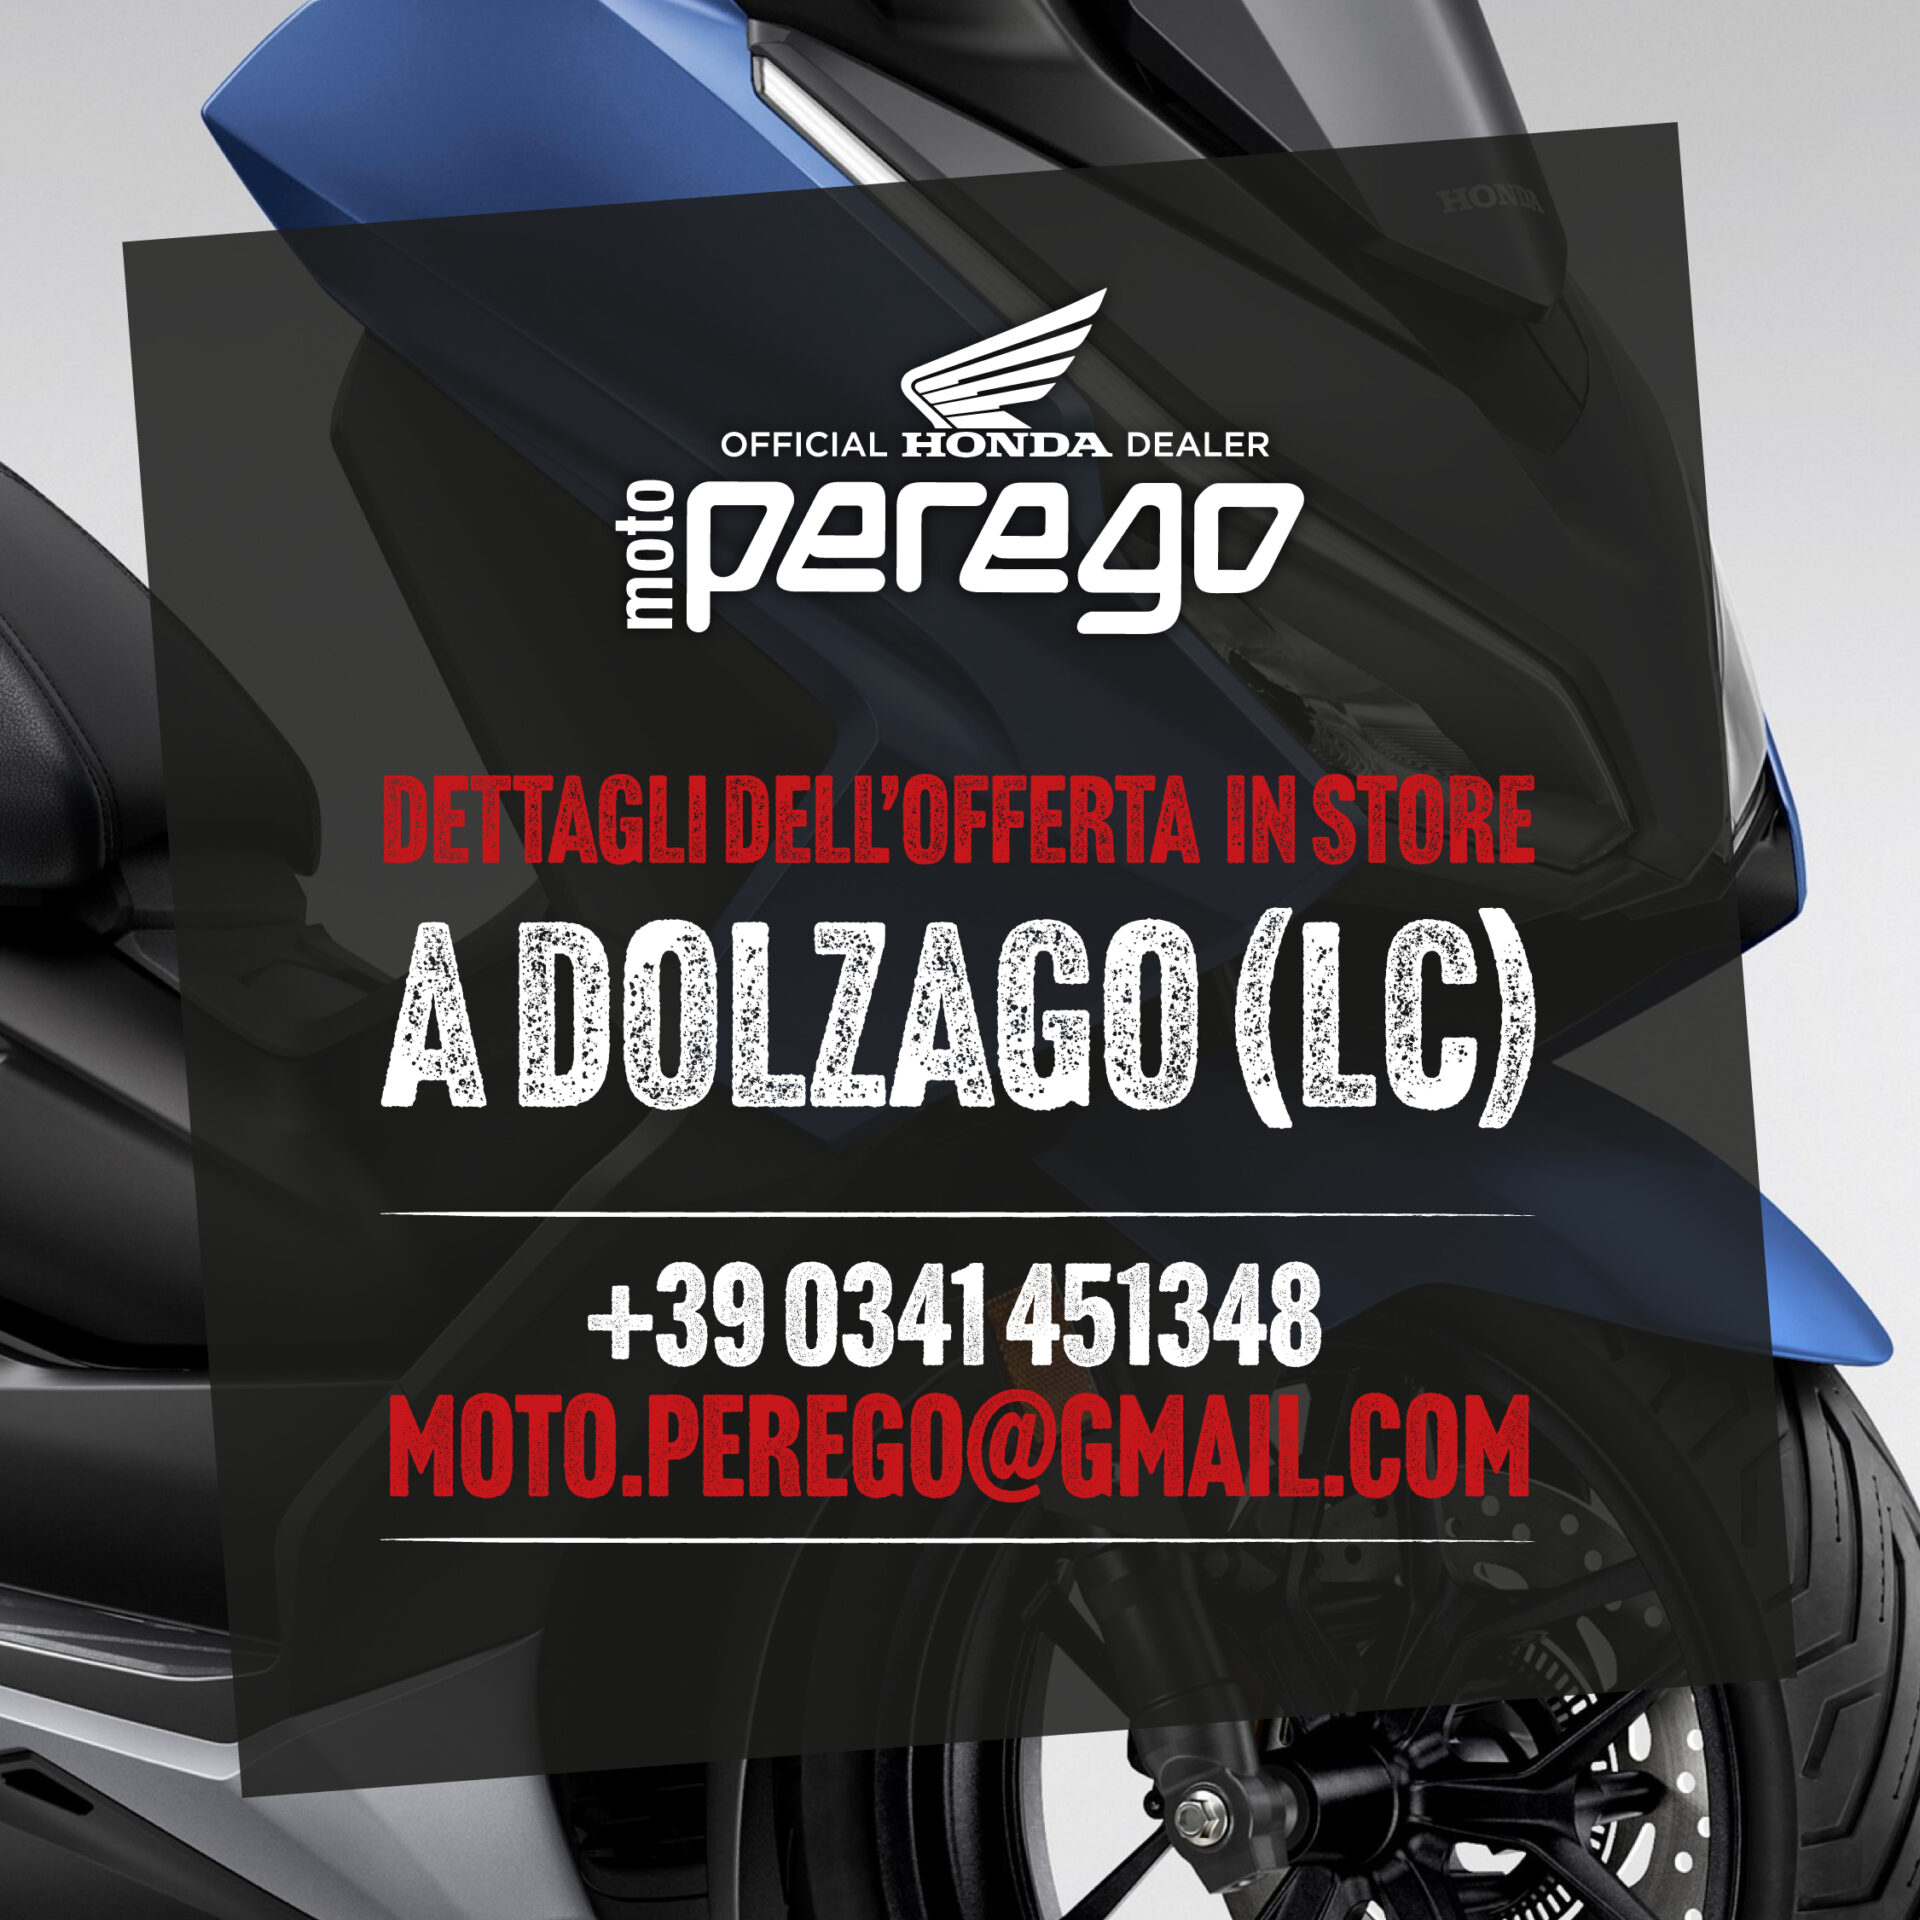 Moto Perego - Official Honda Dealer Provincia di Lecco